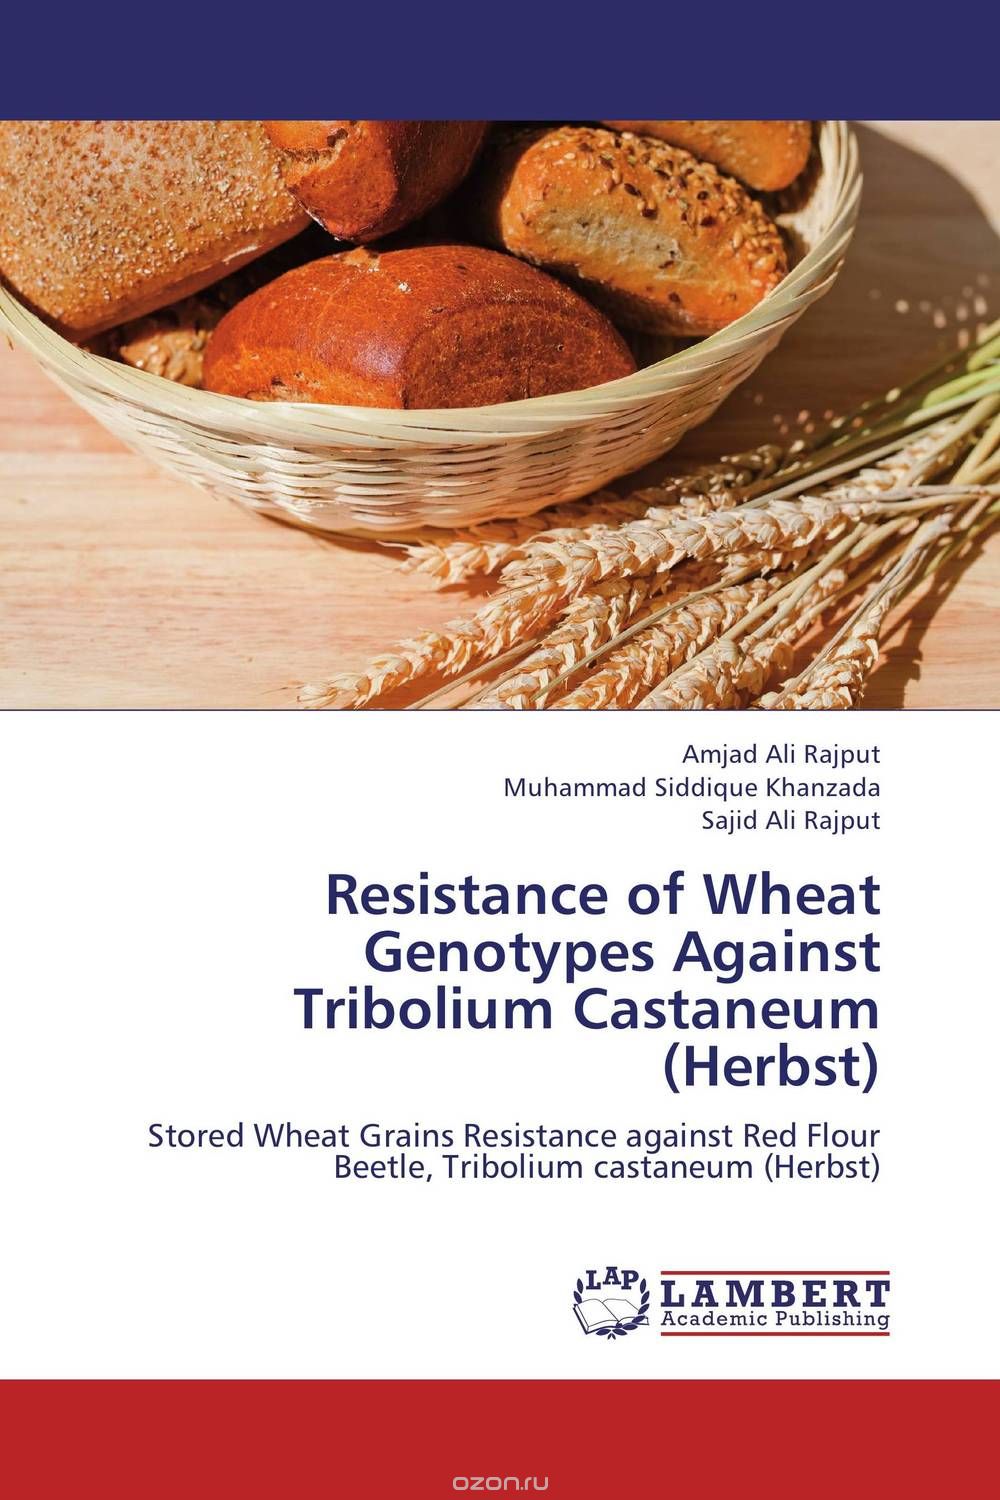 Скачать книгу "Resistance of Wheat Genotypes Against Tribolium Castaneum (Herbst)"